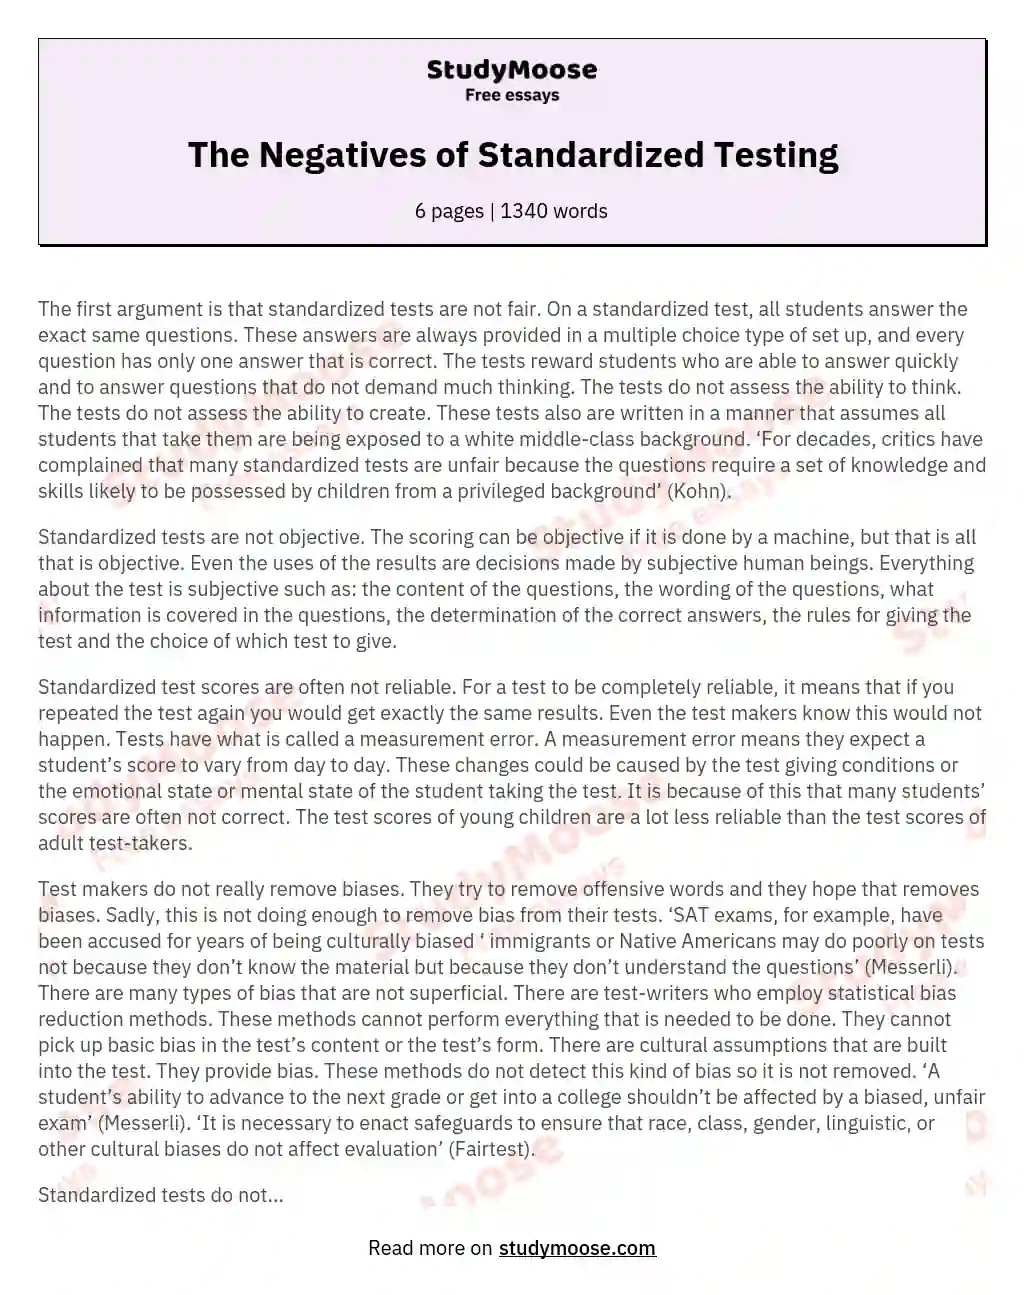 The Negatives of Standardized Testing essay